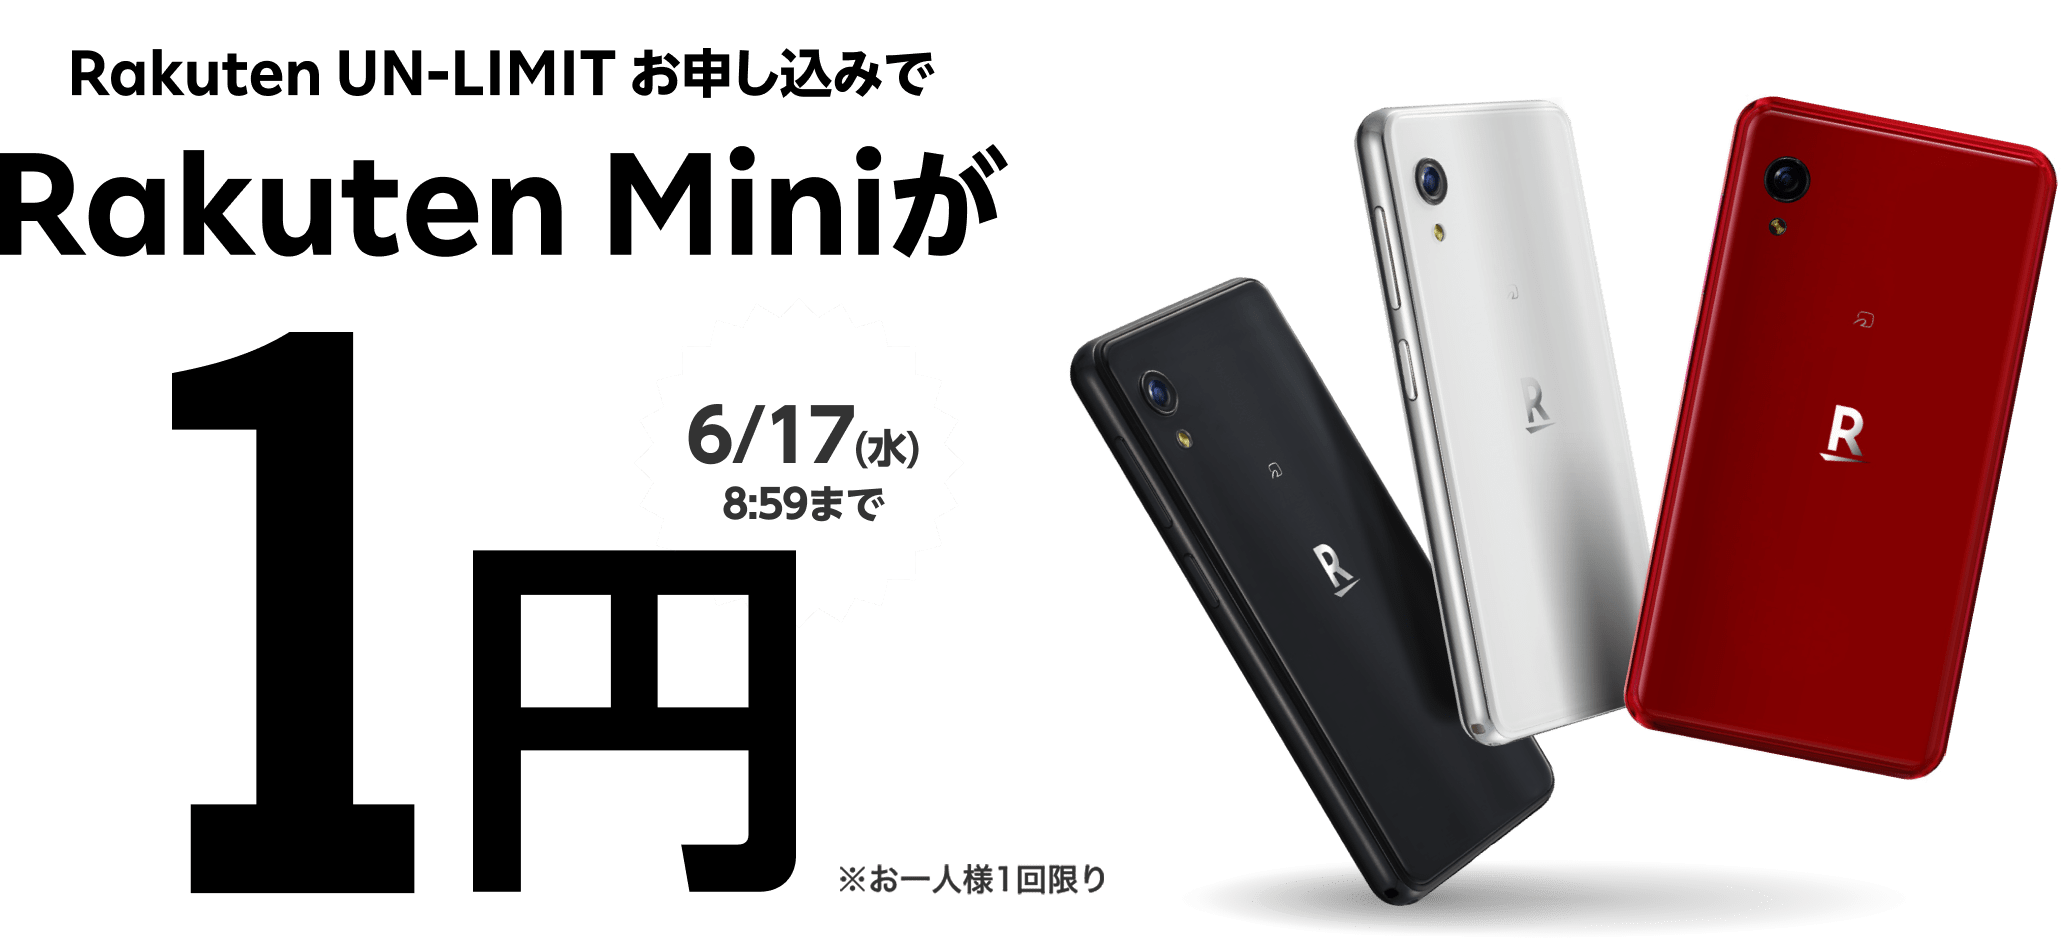 https://network.mobile.rakuten.co.jp/assets/img/campaign/mini-discount/img_discount-mini_01.png?200525